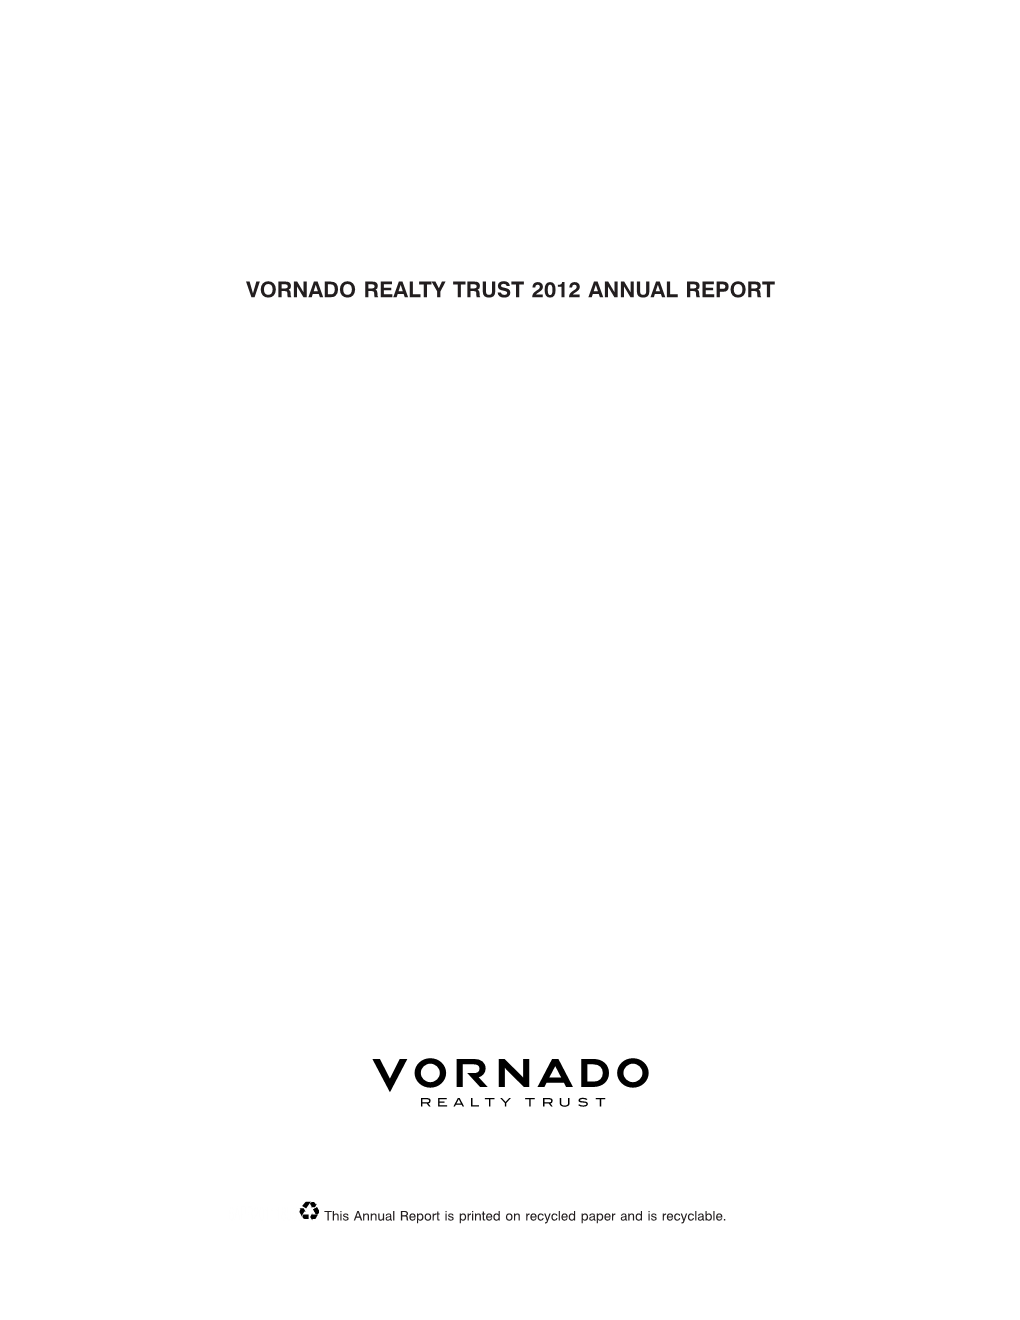 Vornado Realty Trust 2012 Annual Report